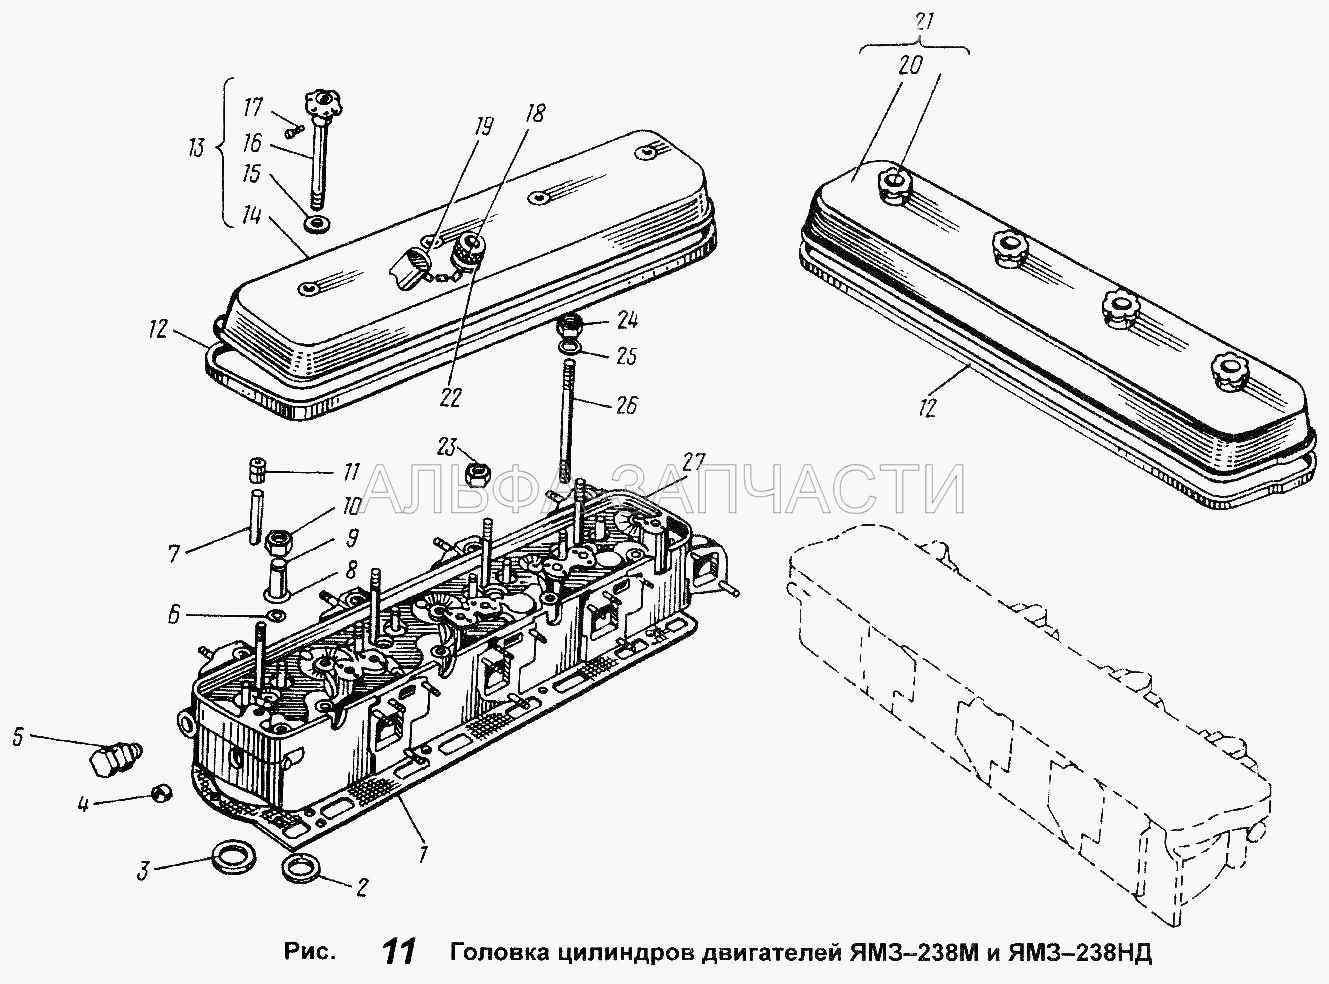 Головка цилиндров двигателей ЯМЗ-238М и ЯМЗ-238НД  